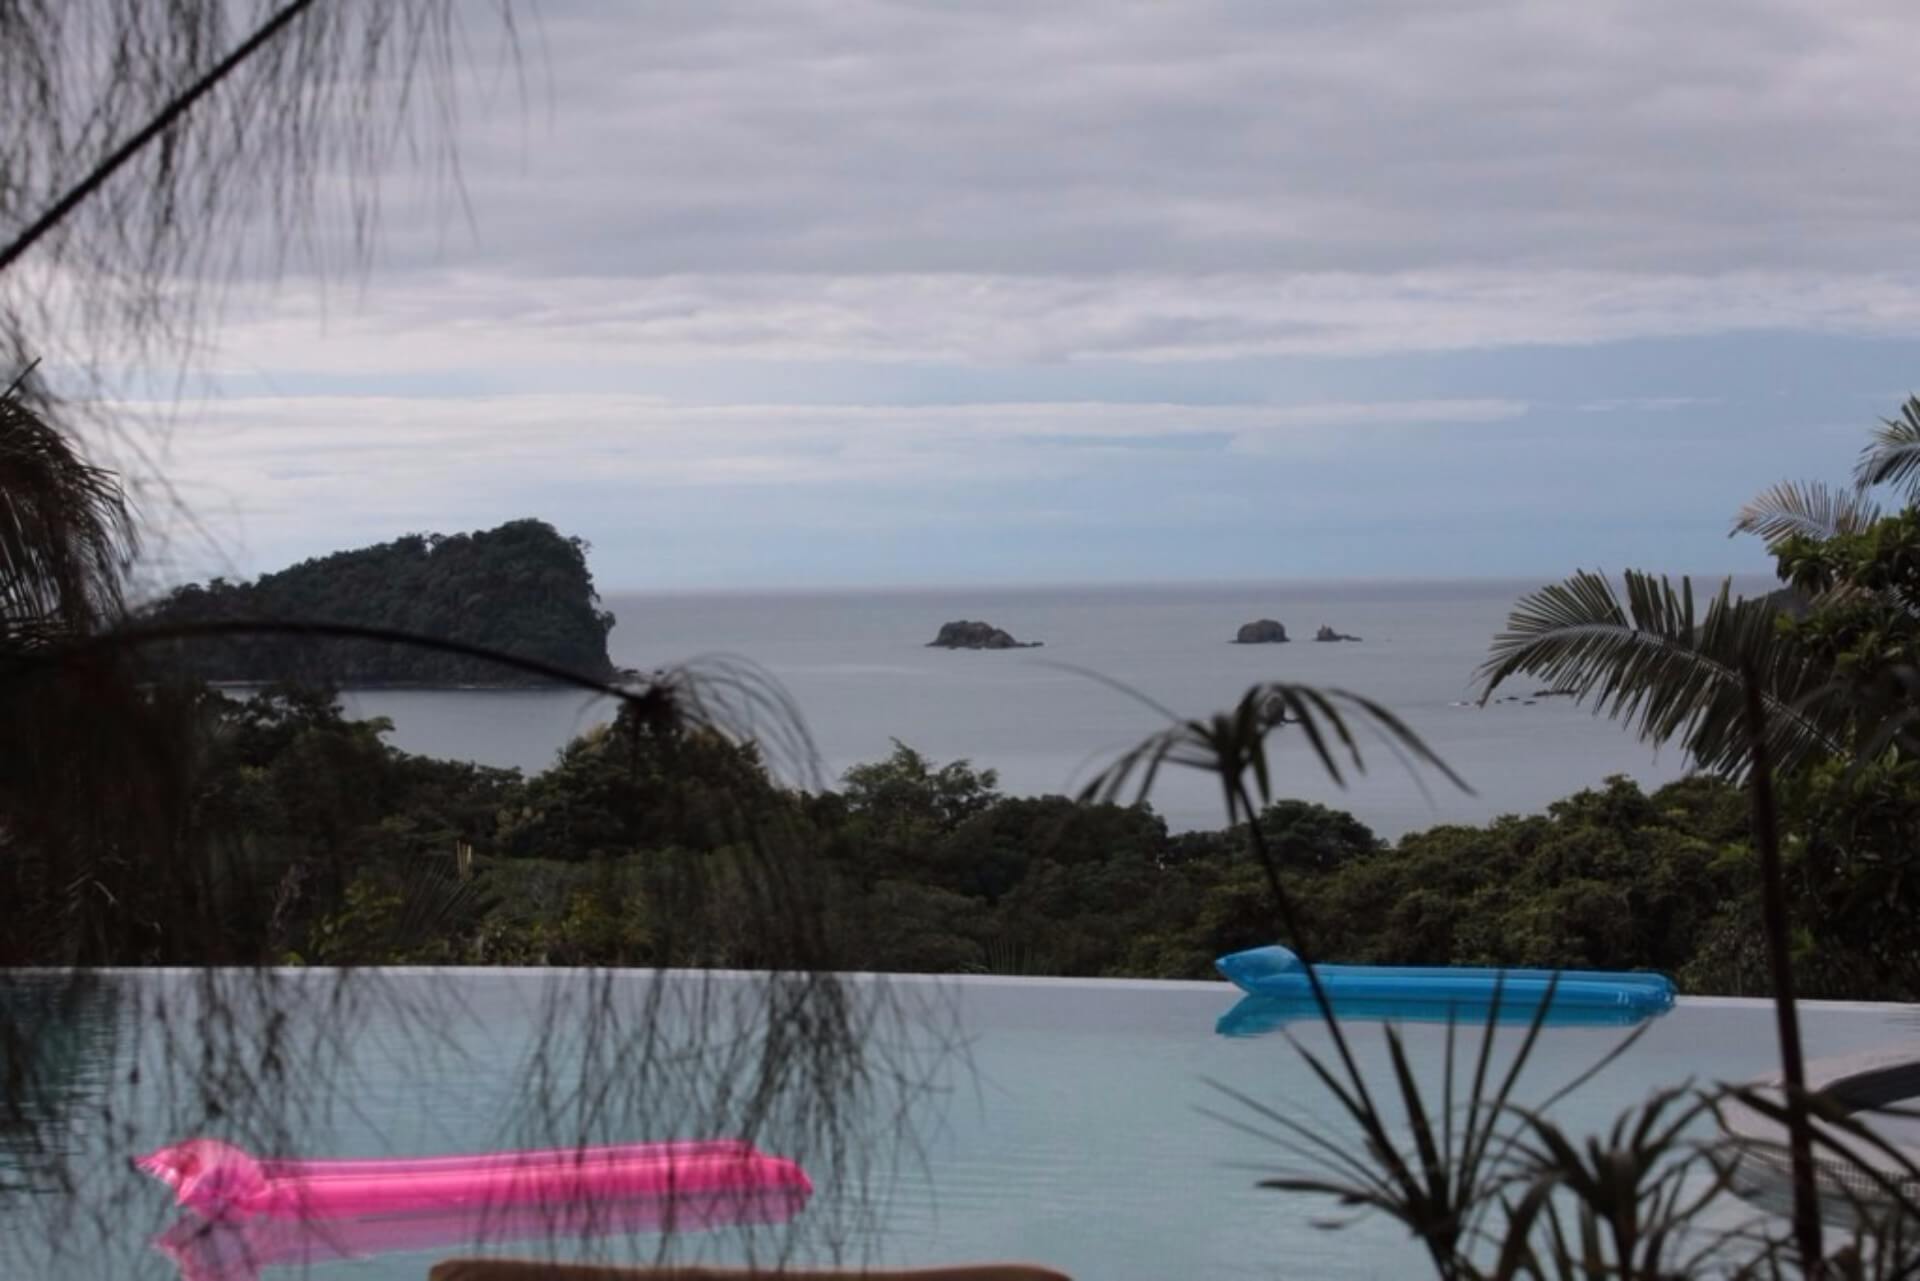 Enjoy this infinity pool as you overlook the beautiful Ocean views.